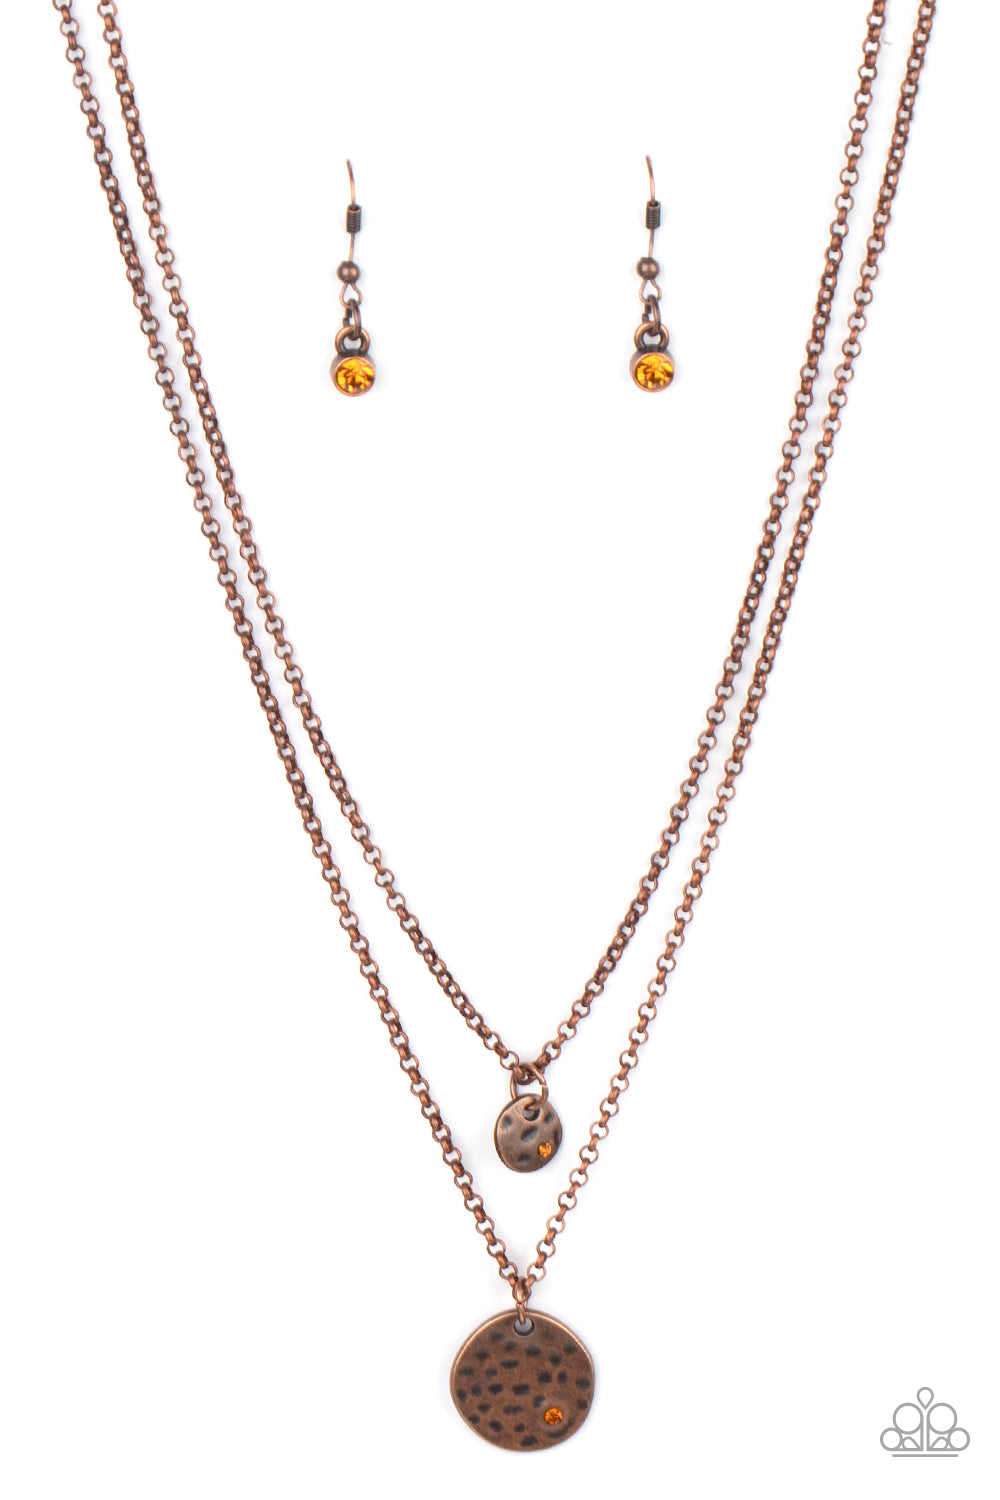 Paparazzi - Modern Minimalist - Copper Necklace - Alies Bling Bar